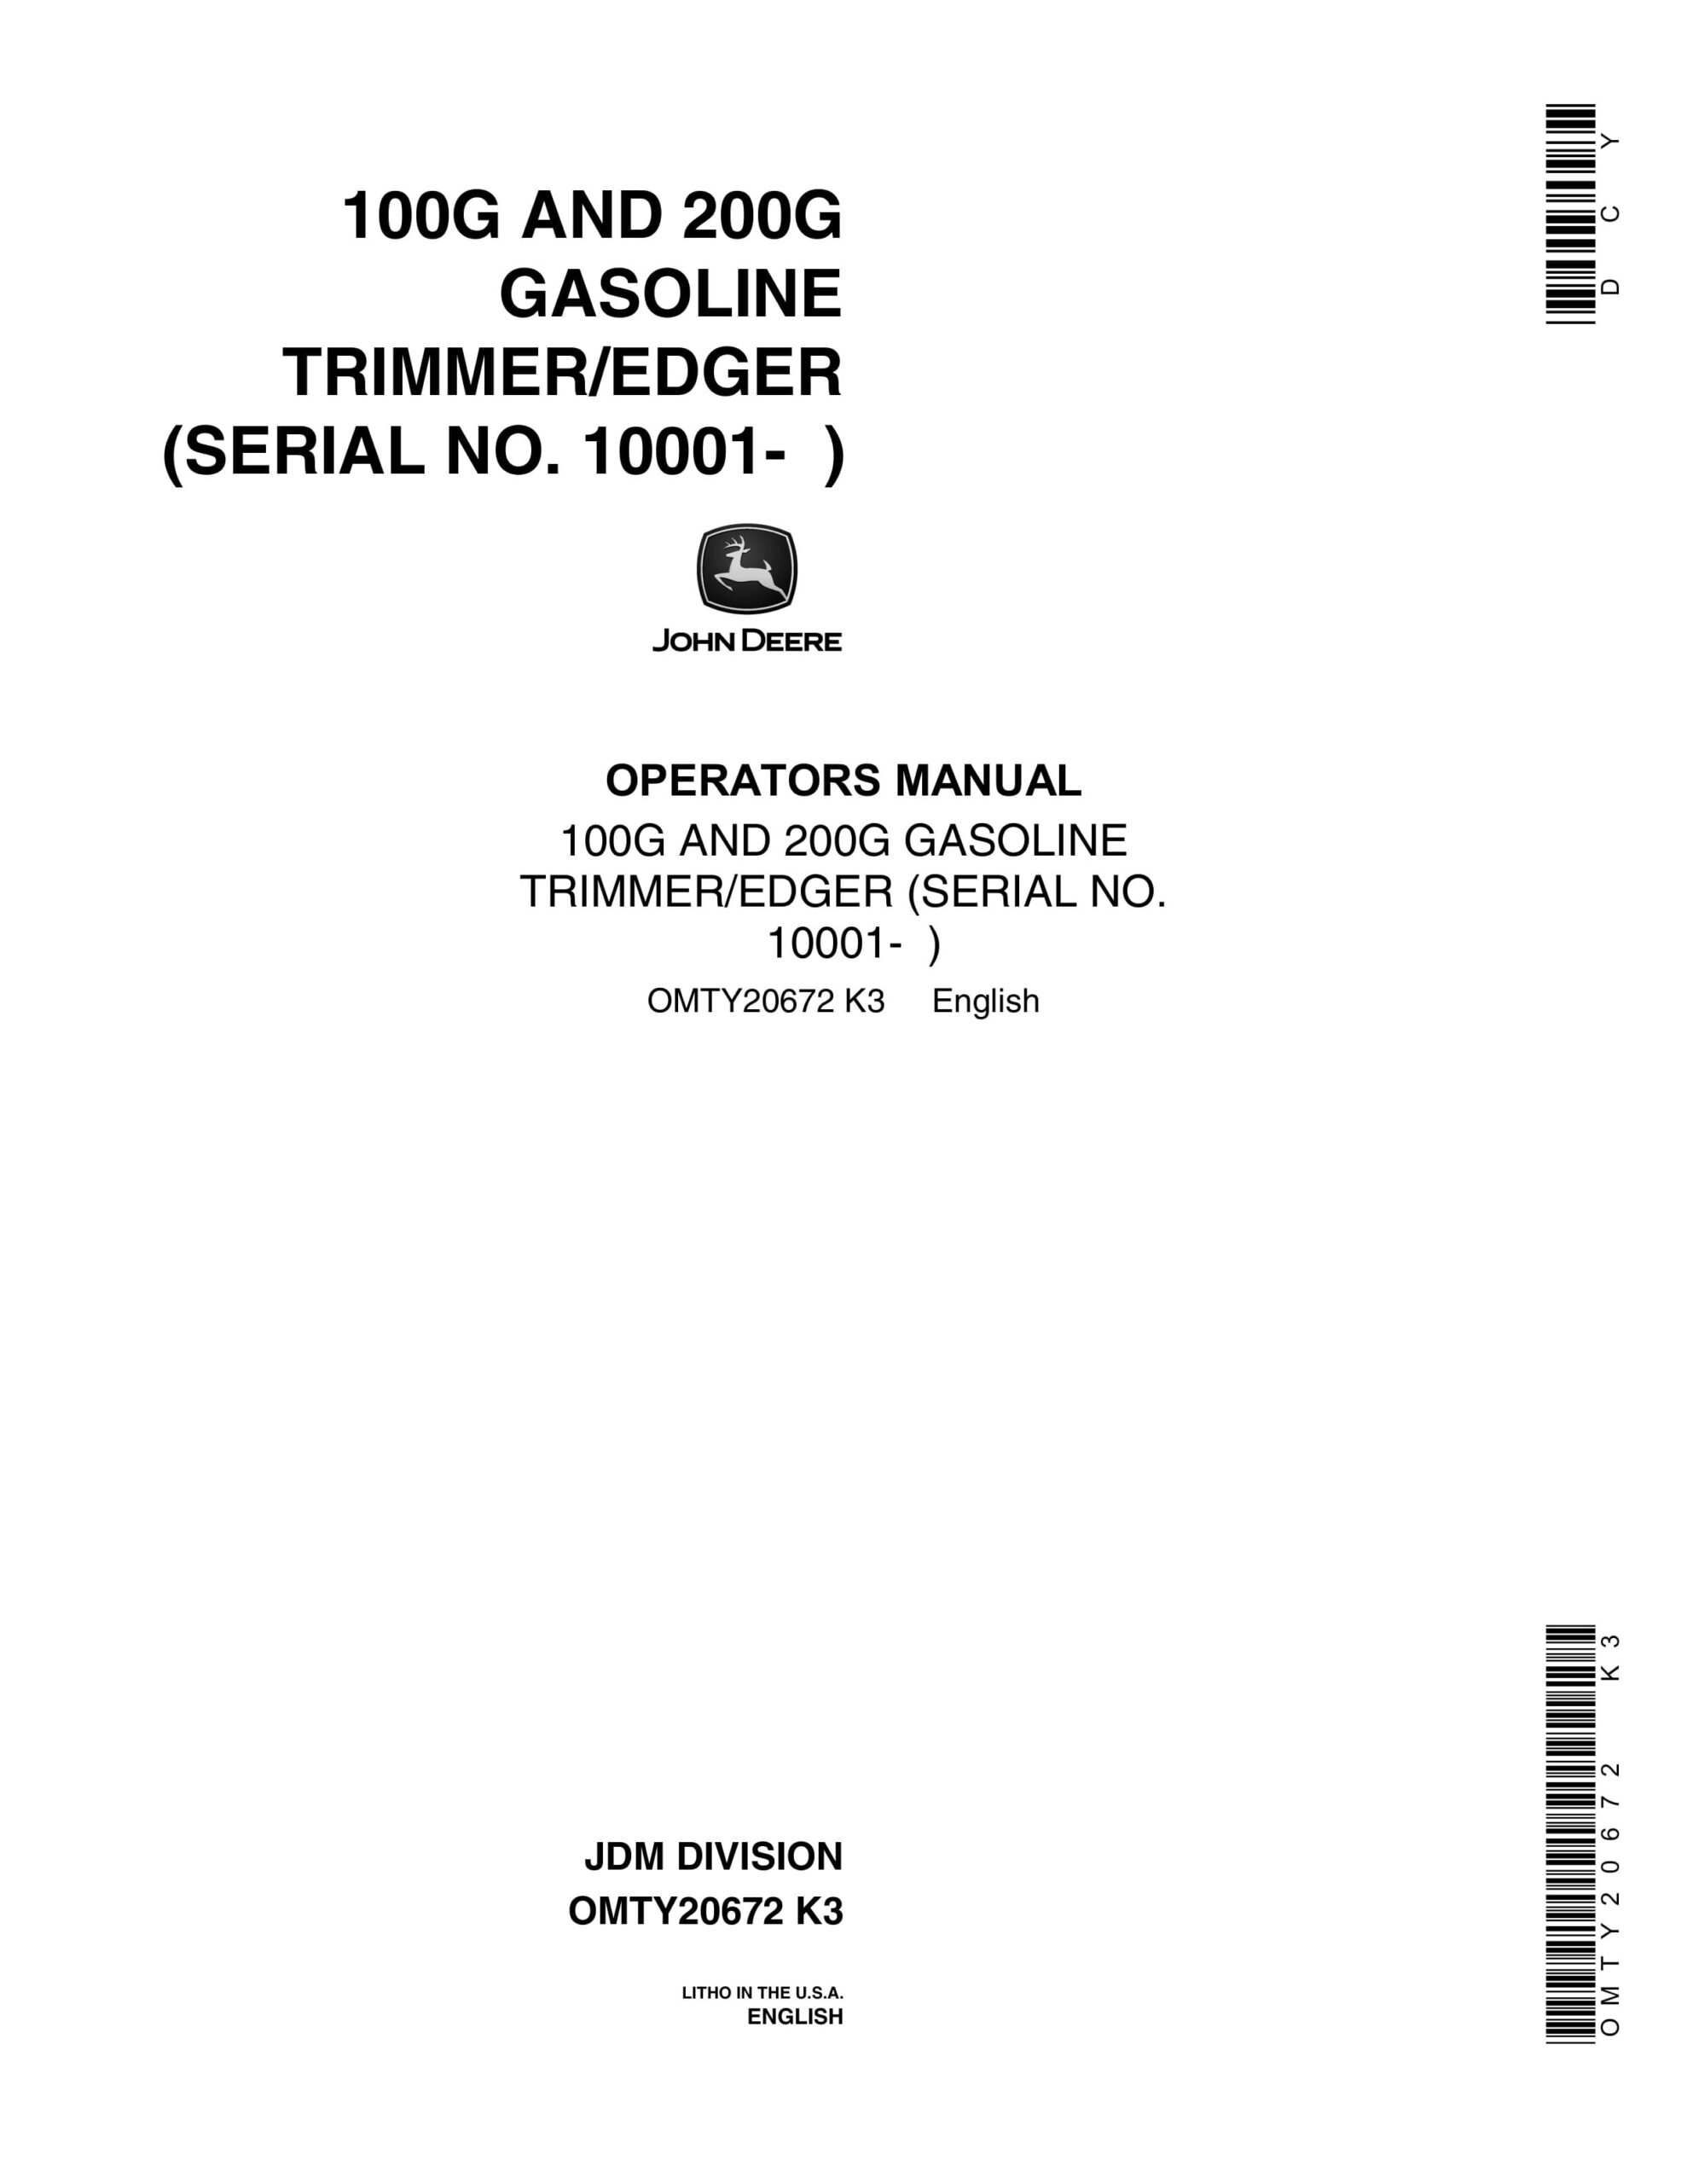 John Deere 100G AND 200G GASOLINE TRIMMER EDGER Operator Manual OMTY20672-1